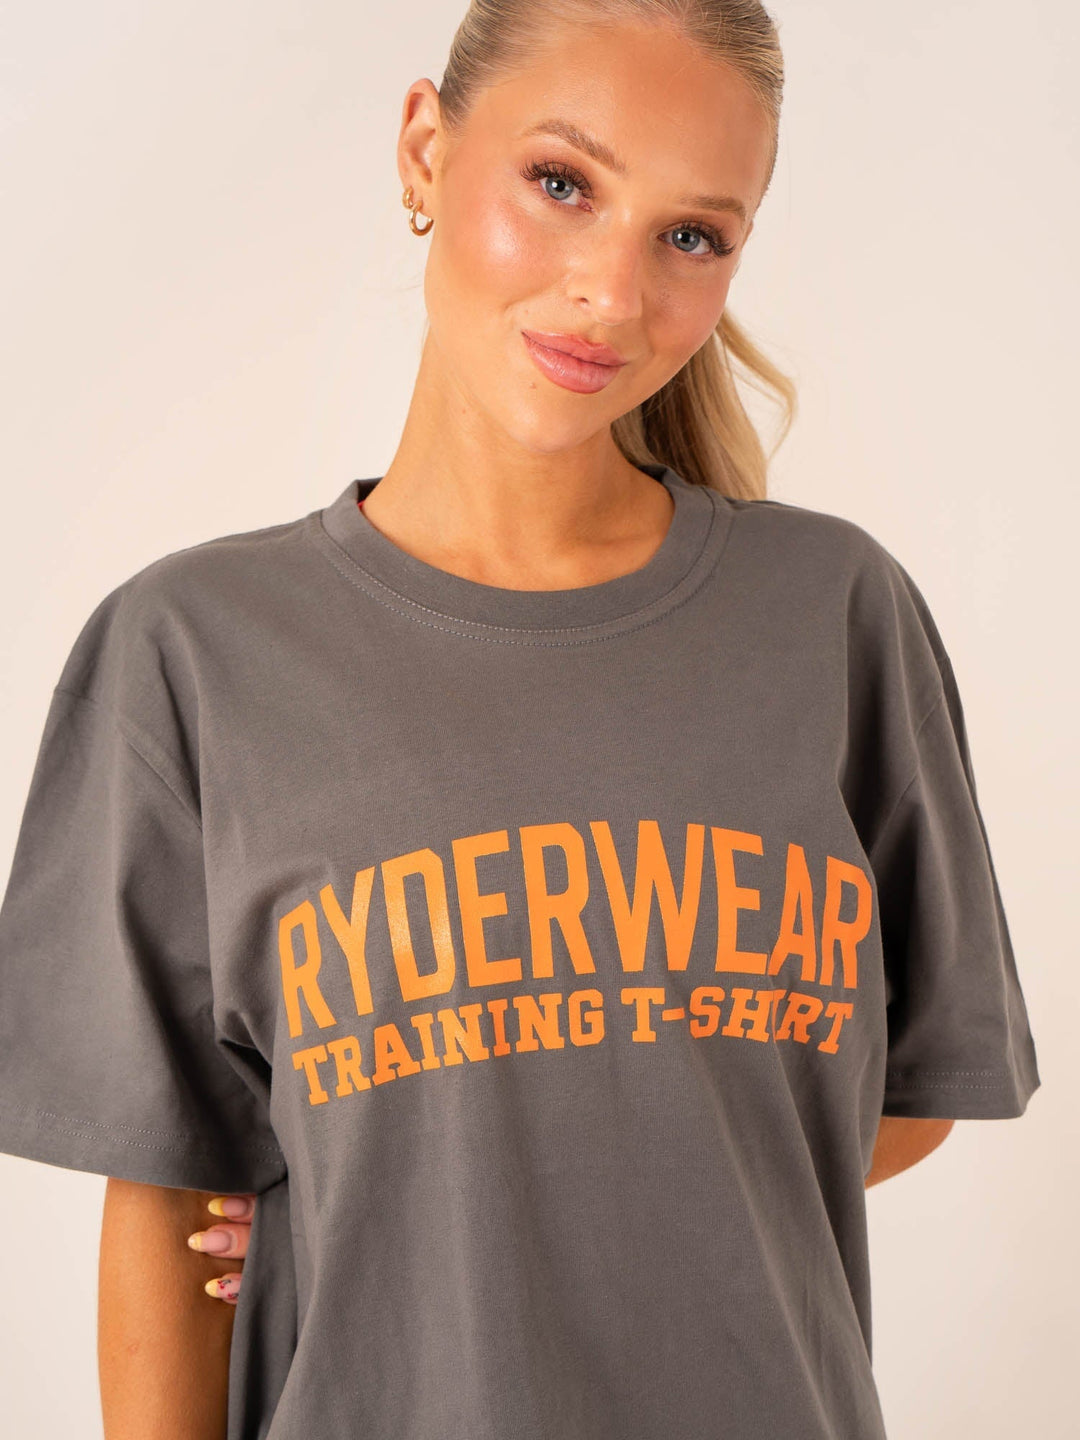 Ryderwear Training T-Shirt - Charcoal Clothing Ryderwear 